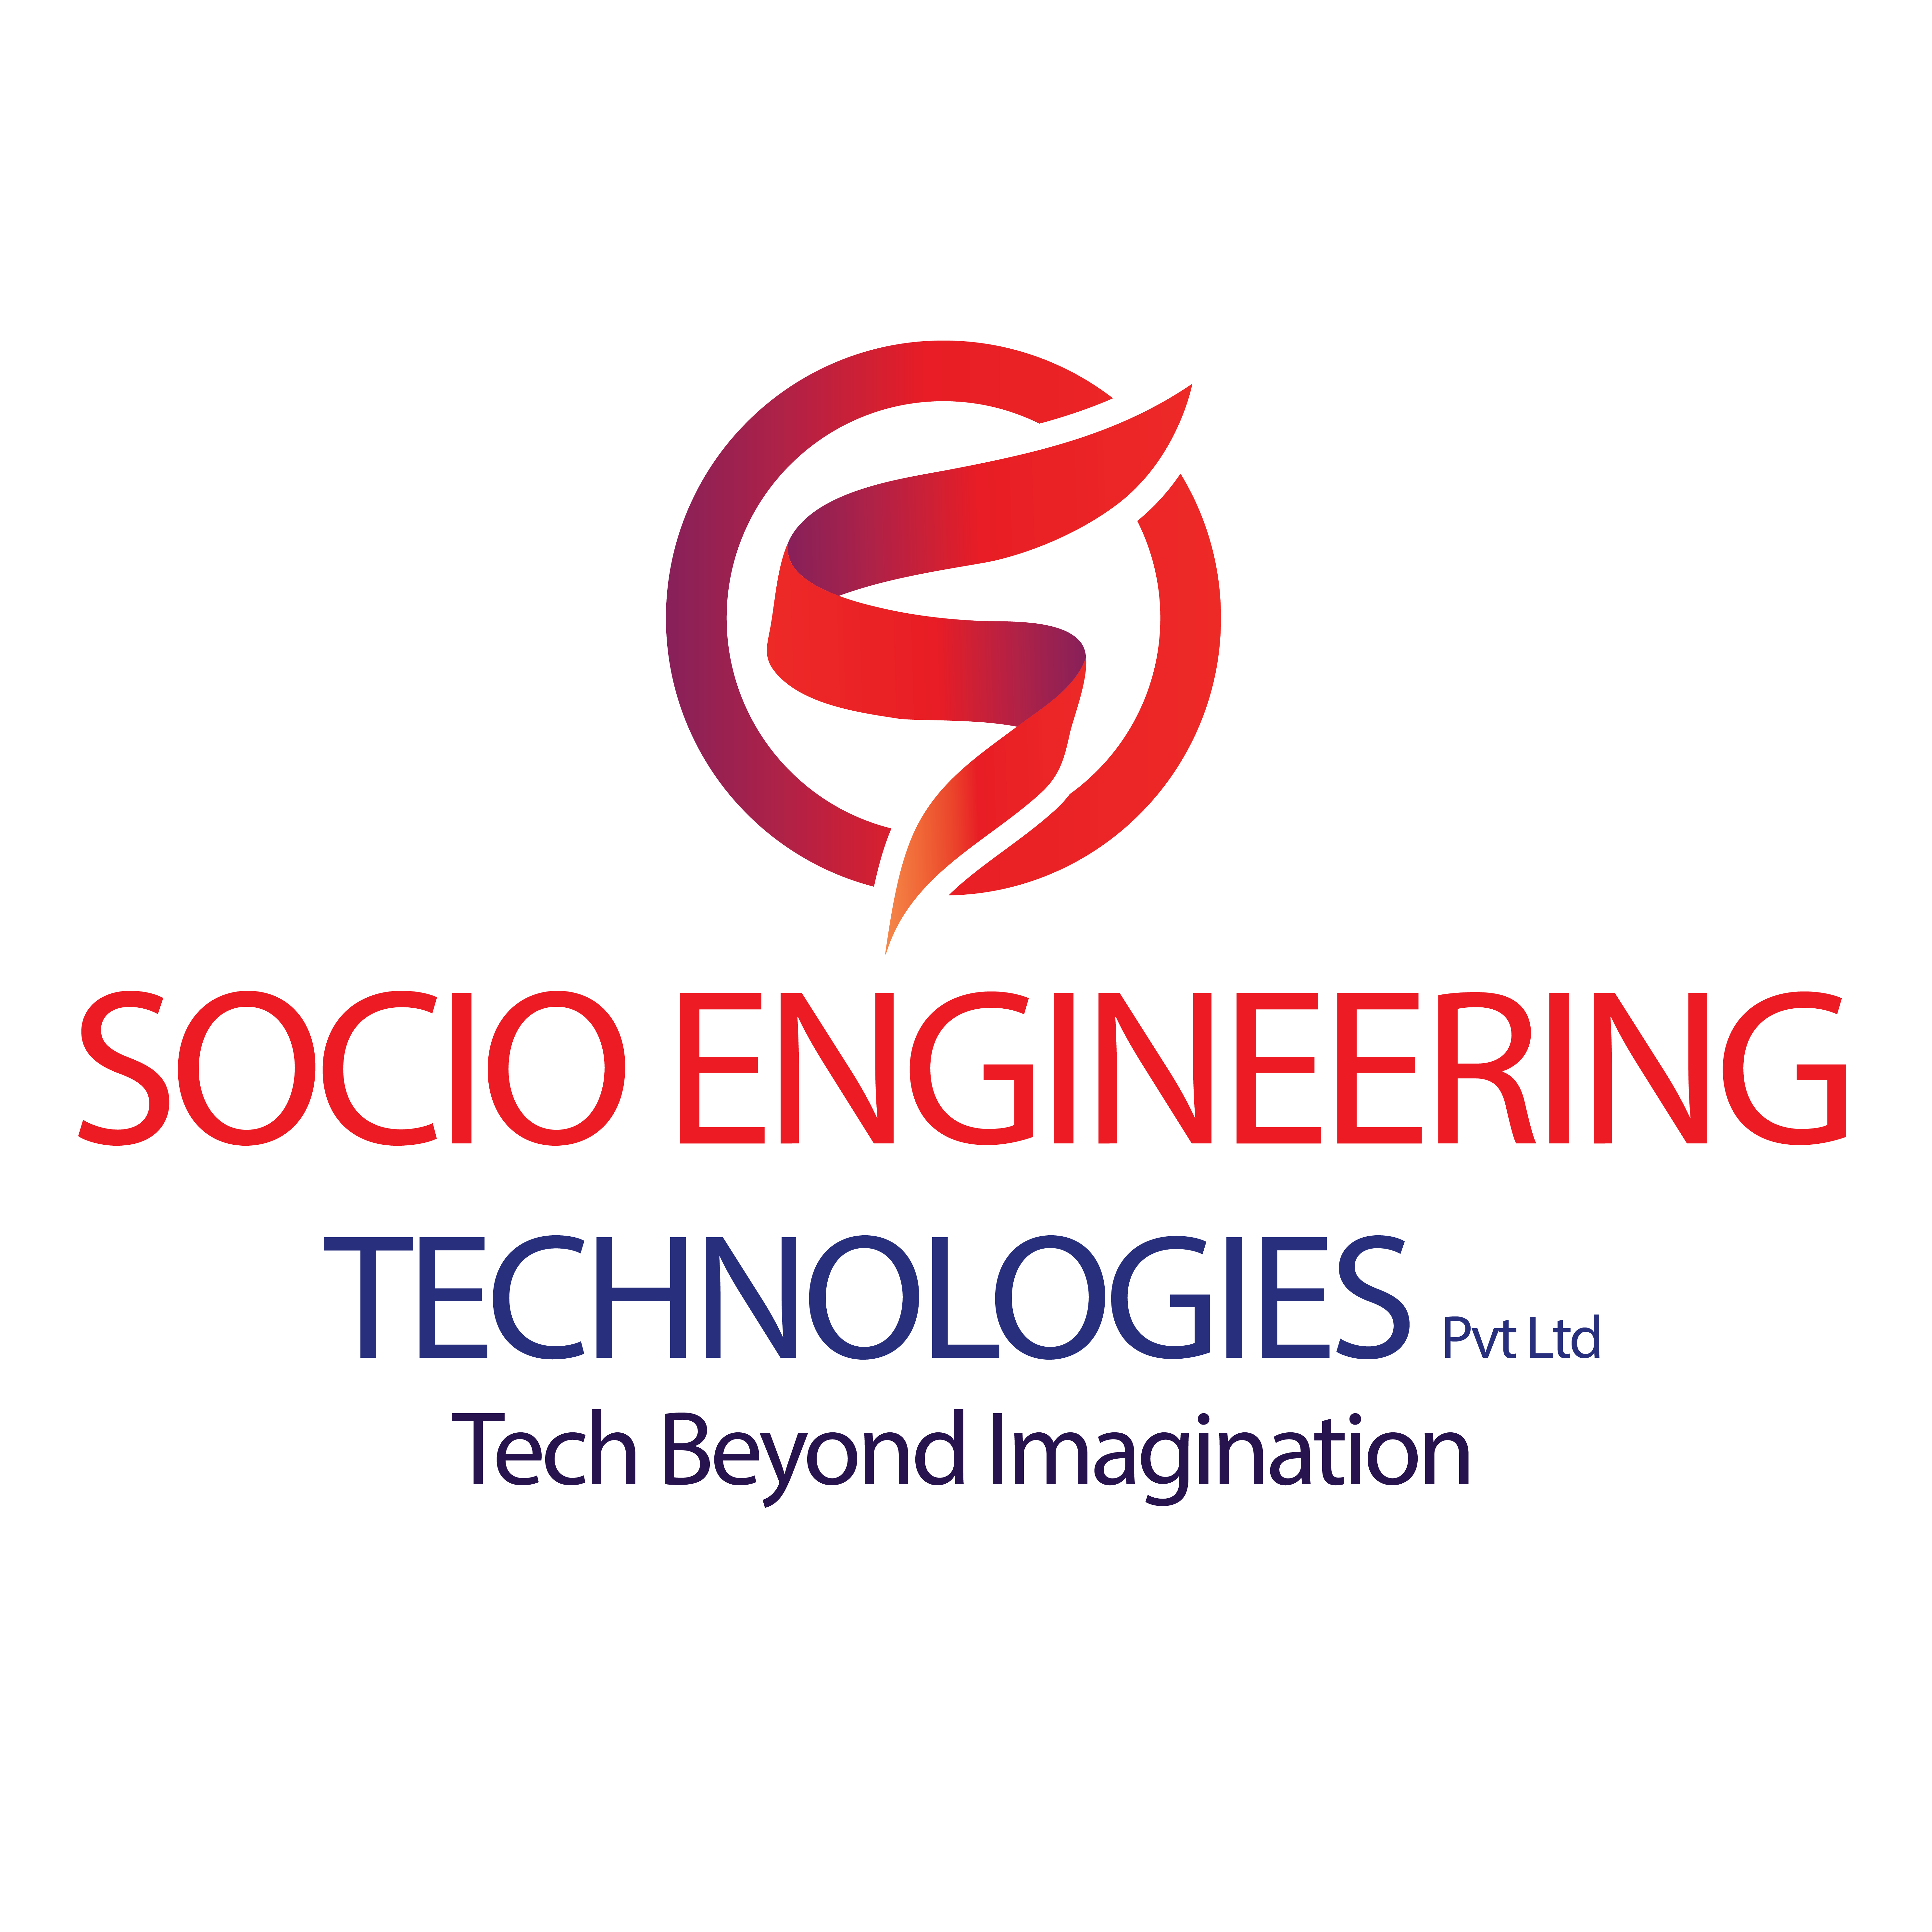 Socio Engineering Technologies Logo